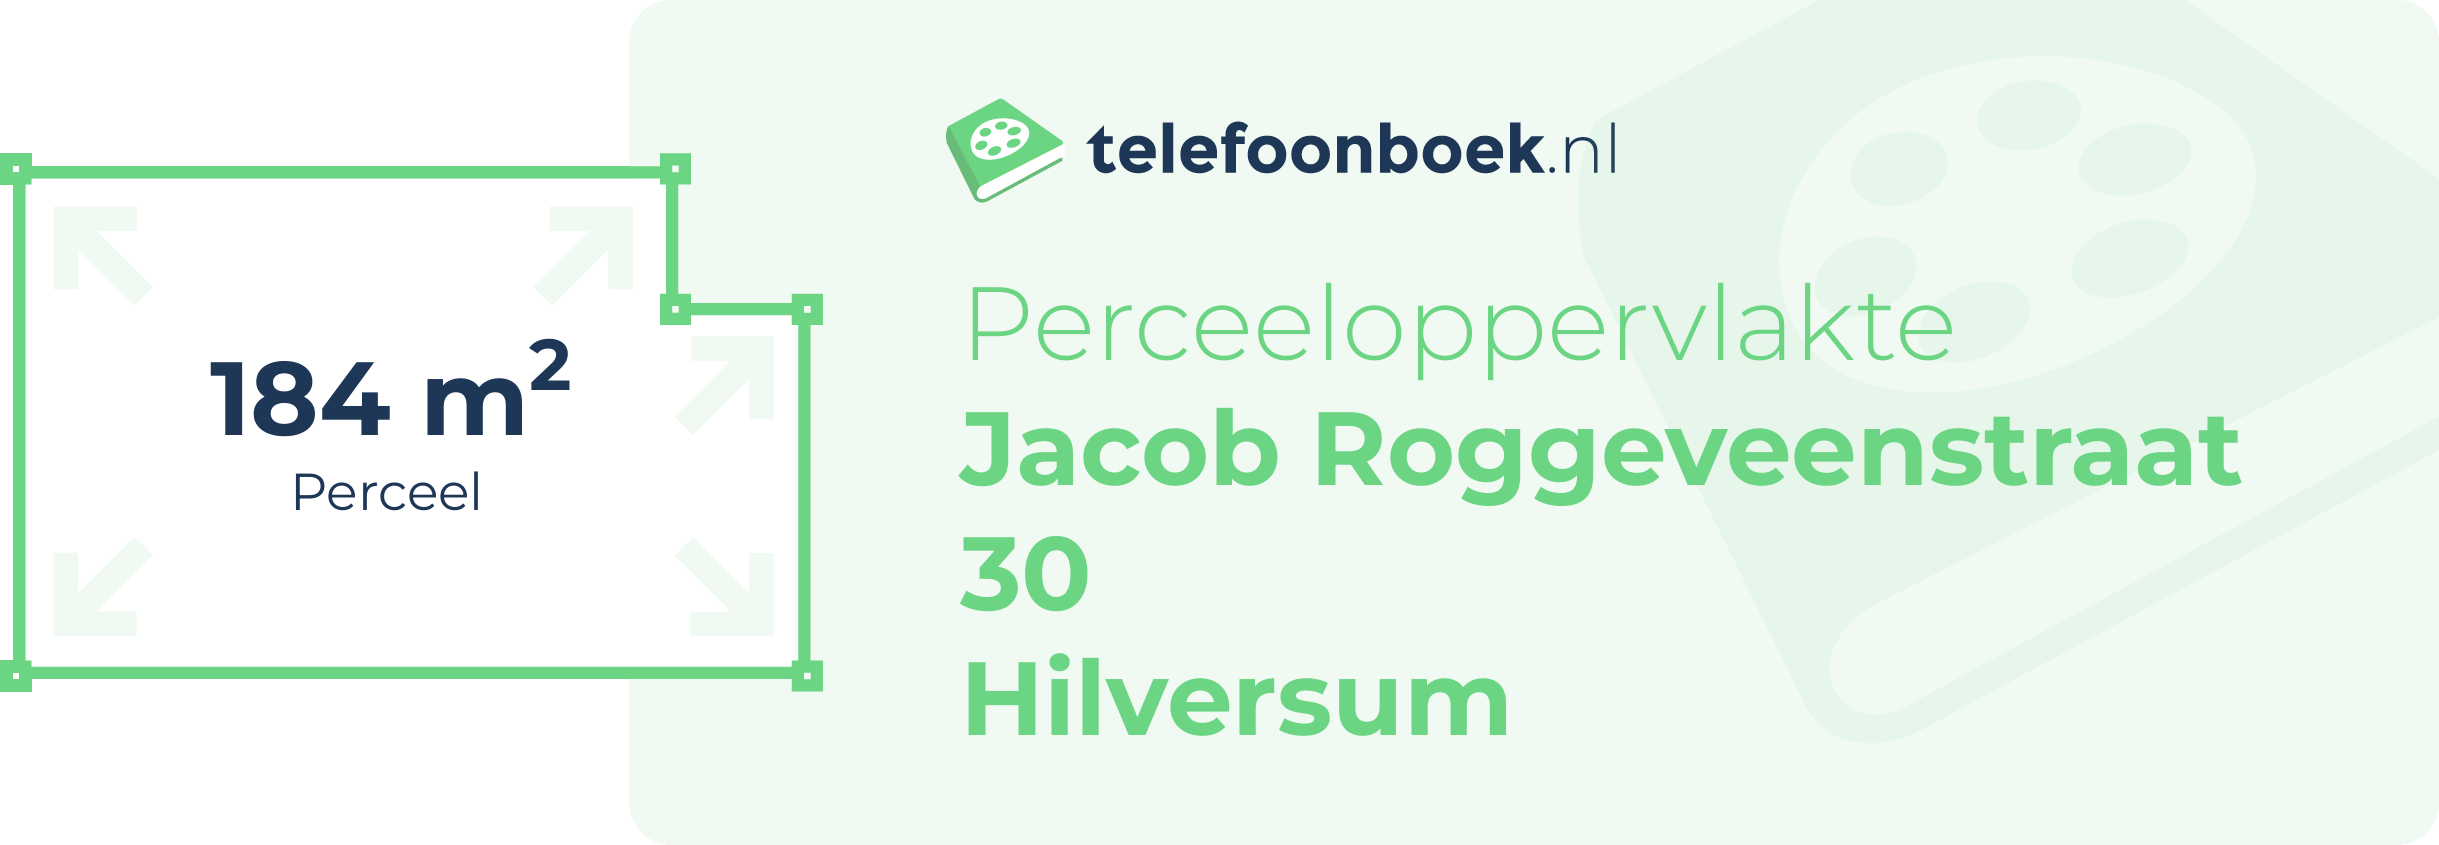 Perceeloppervlakte Jacob Roggeveenstraat 30 Hilversum